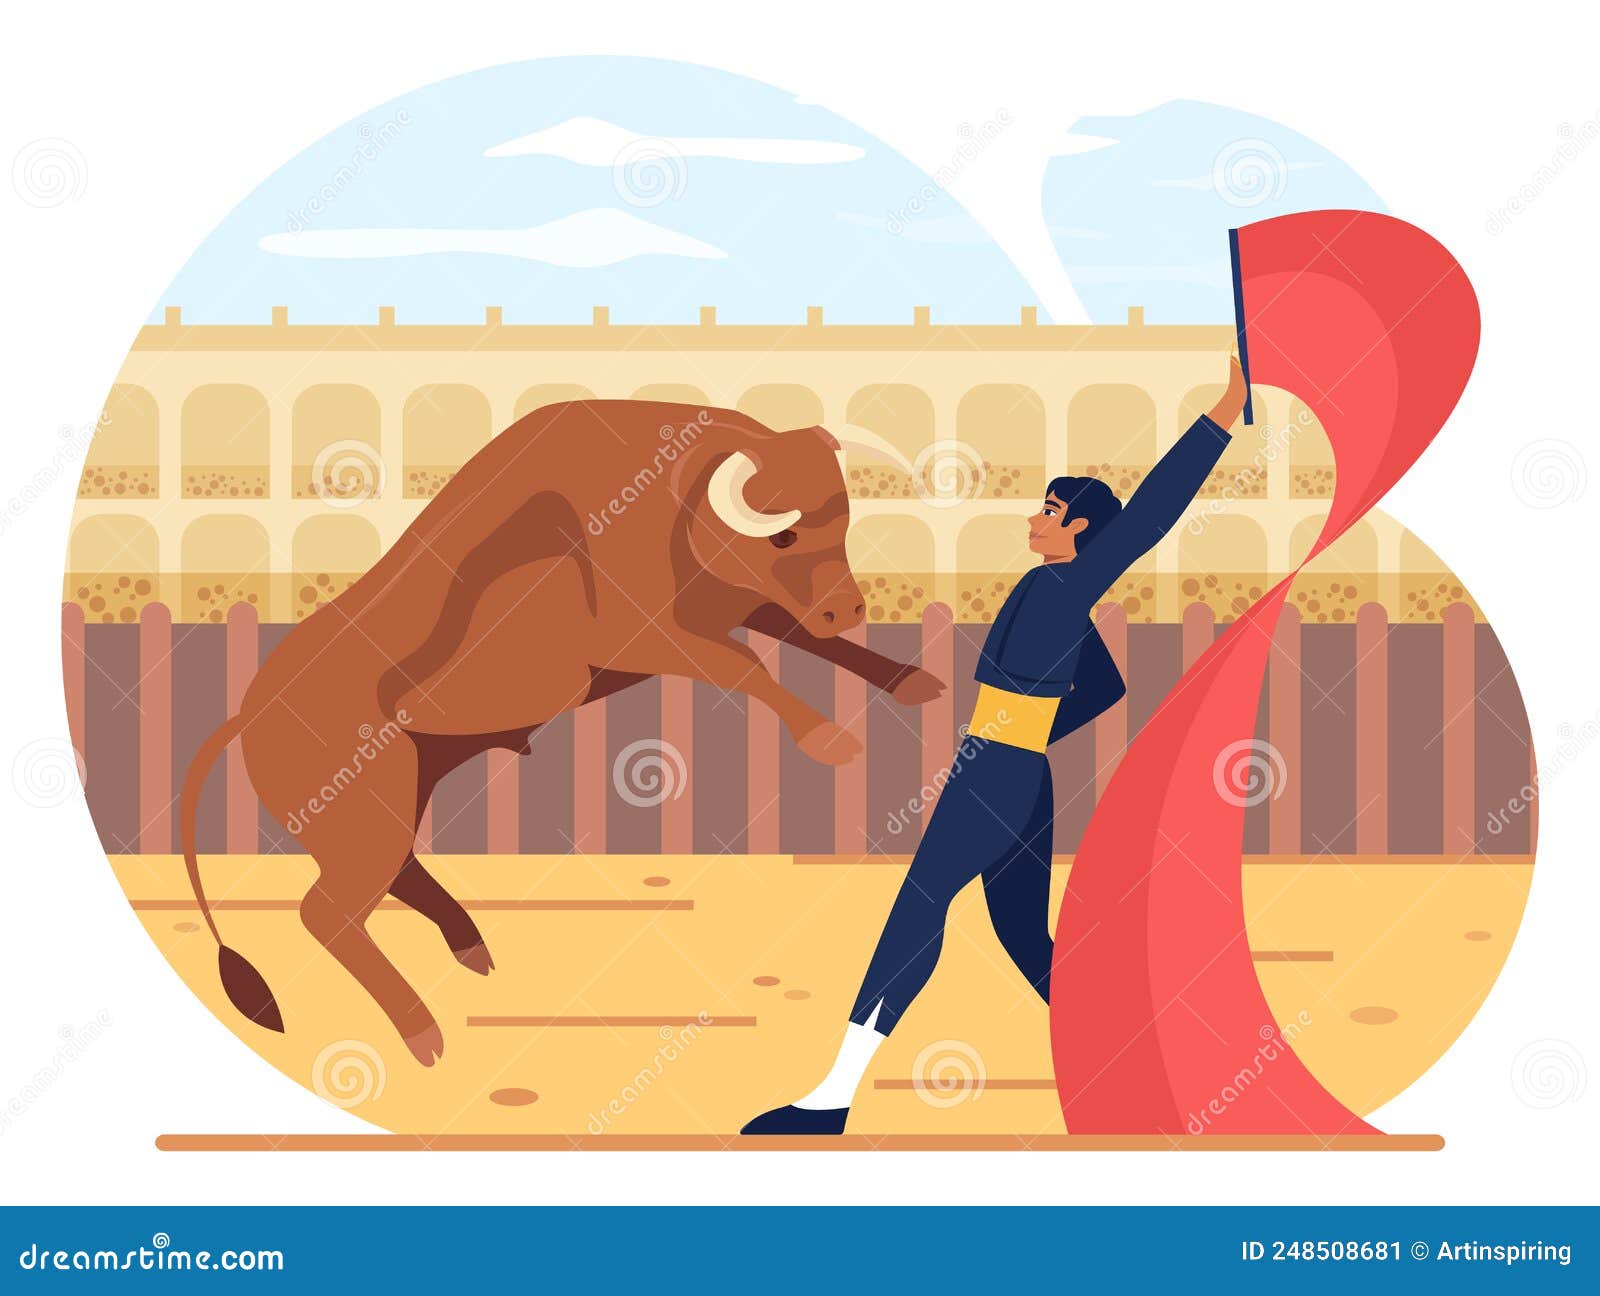 bull fight animated